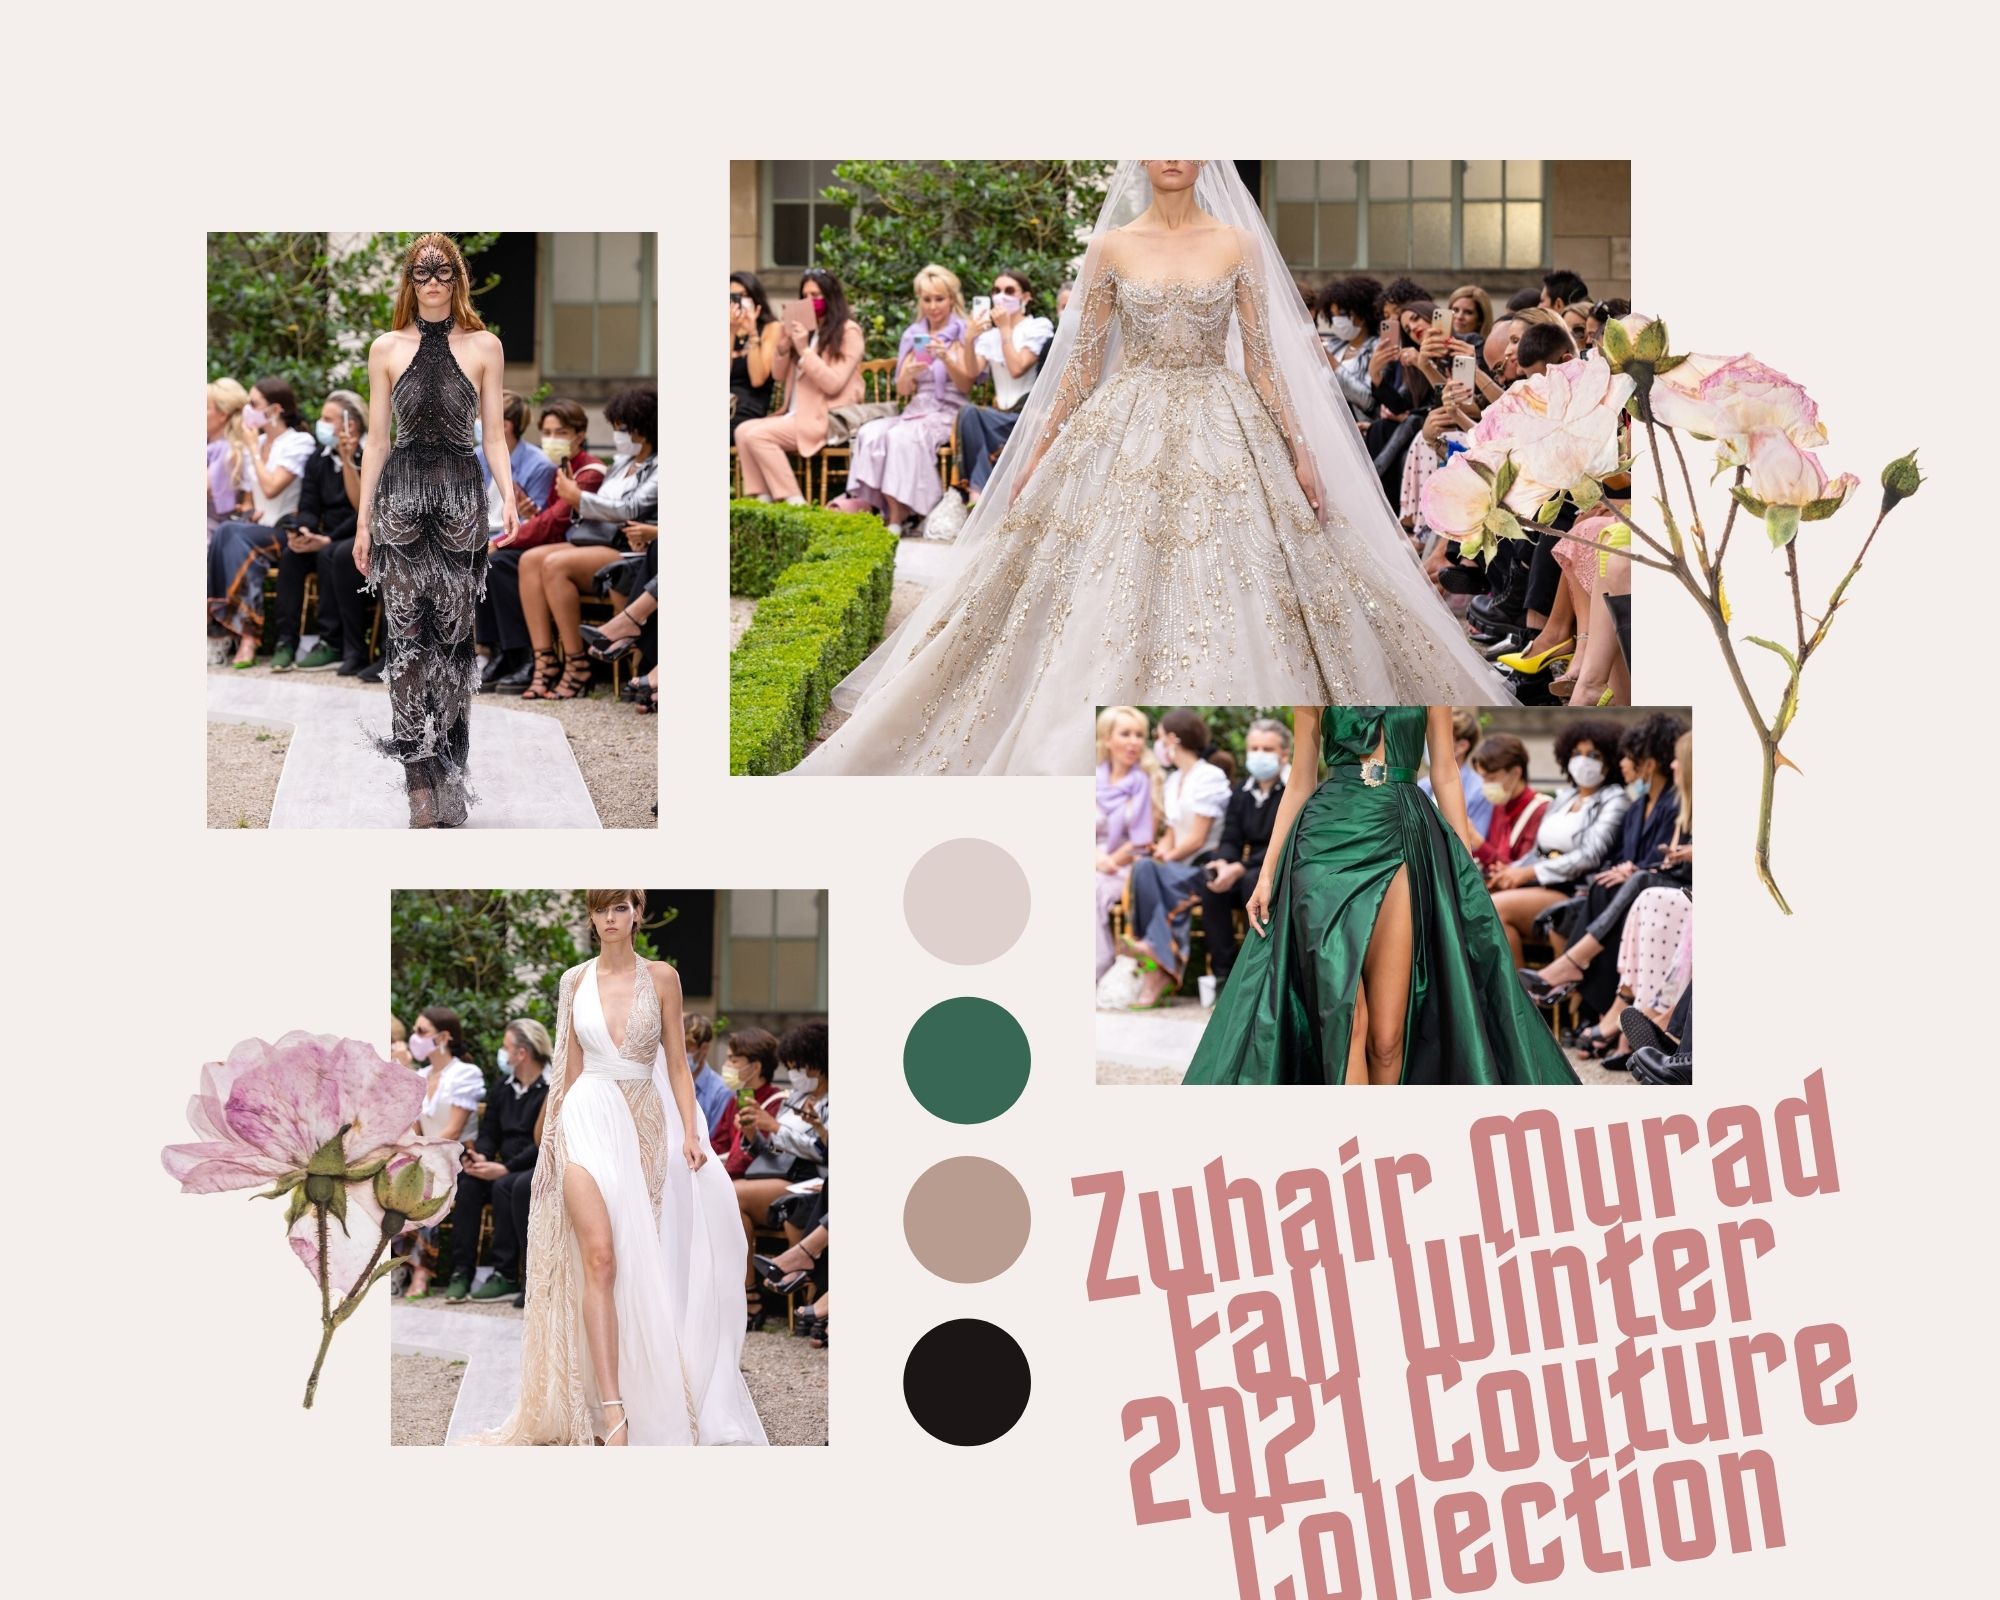 Zuhair-Murad-Fall-Winter-2021-Couture-Collection-1.jpg